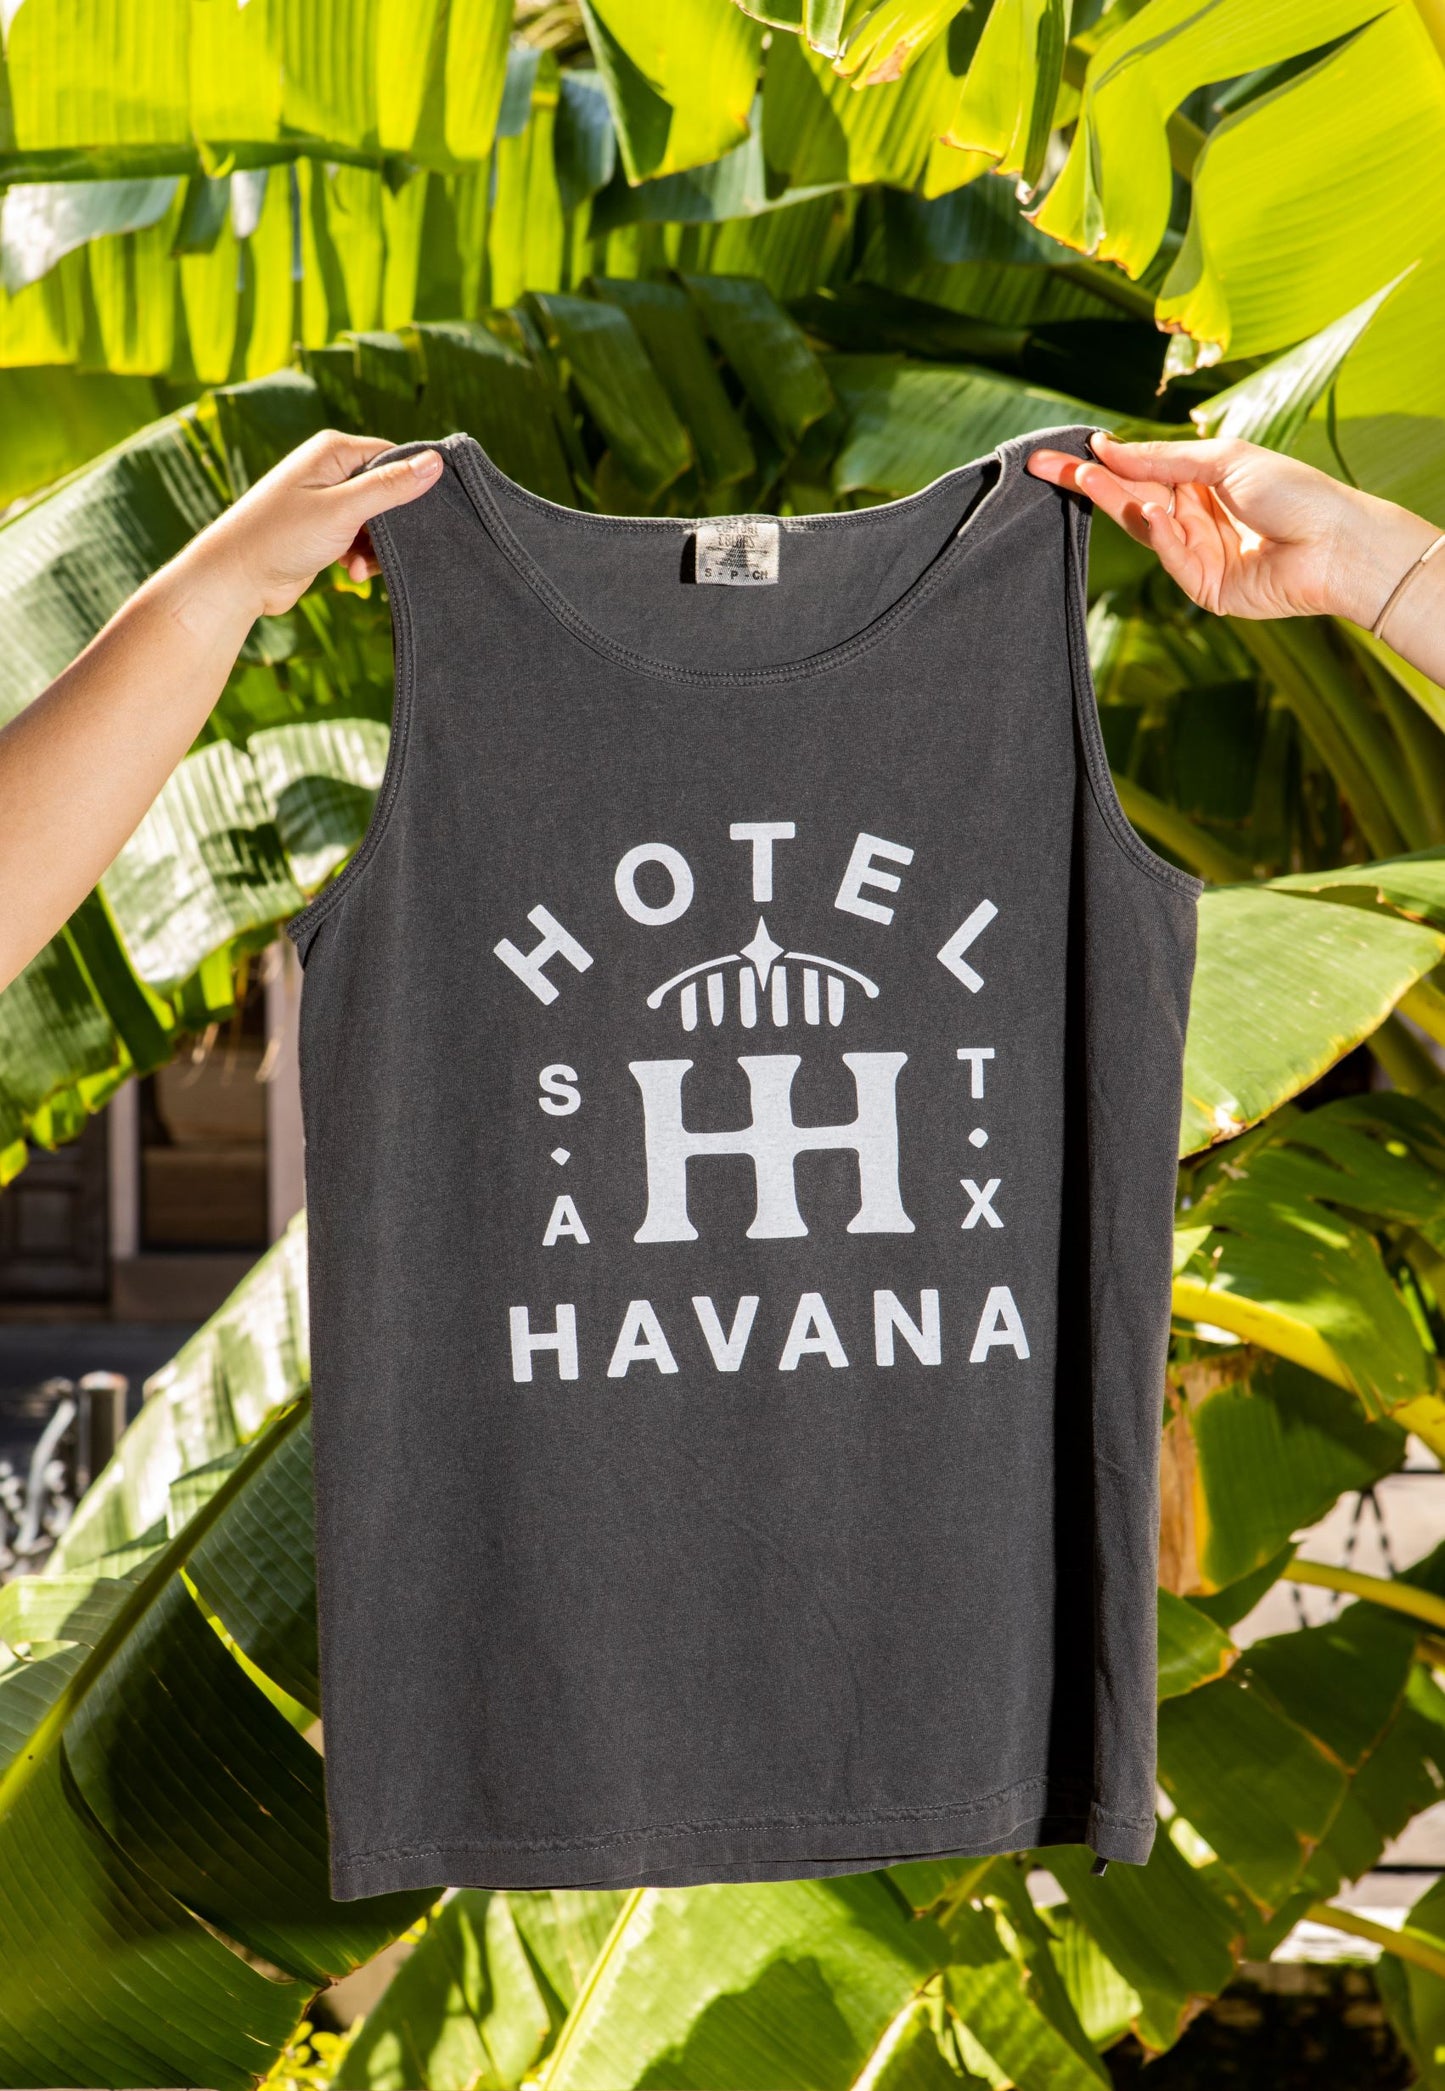 Hotel Havana Tank